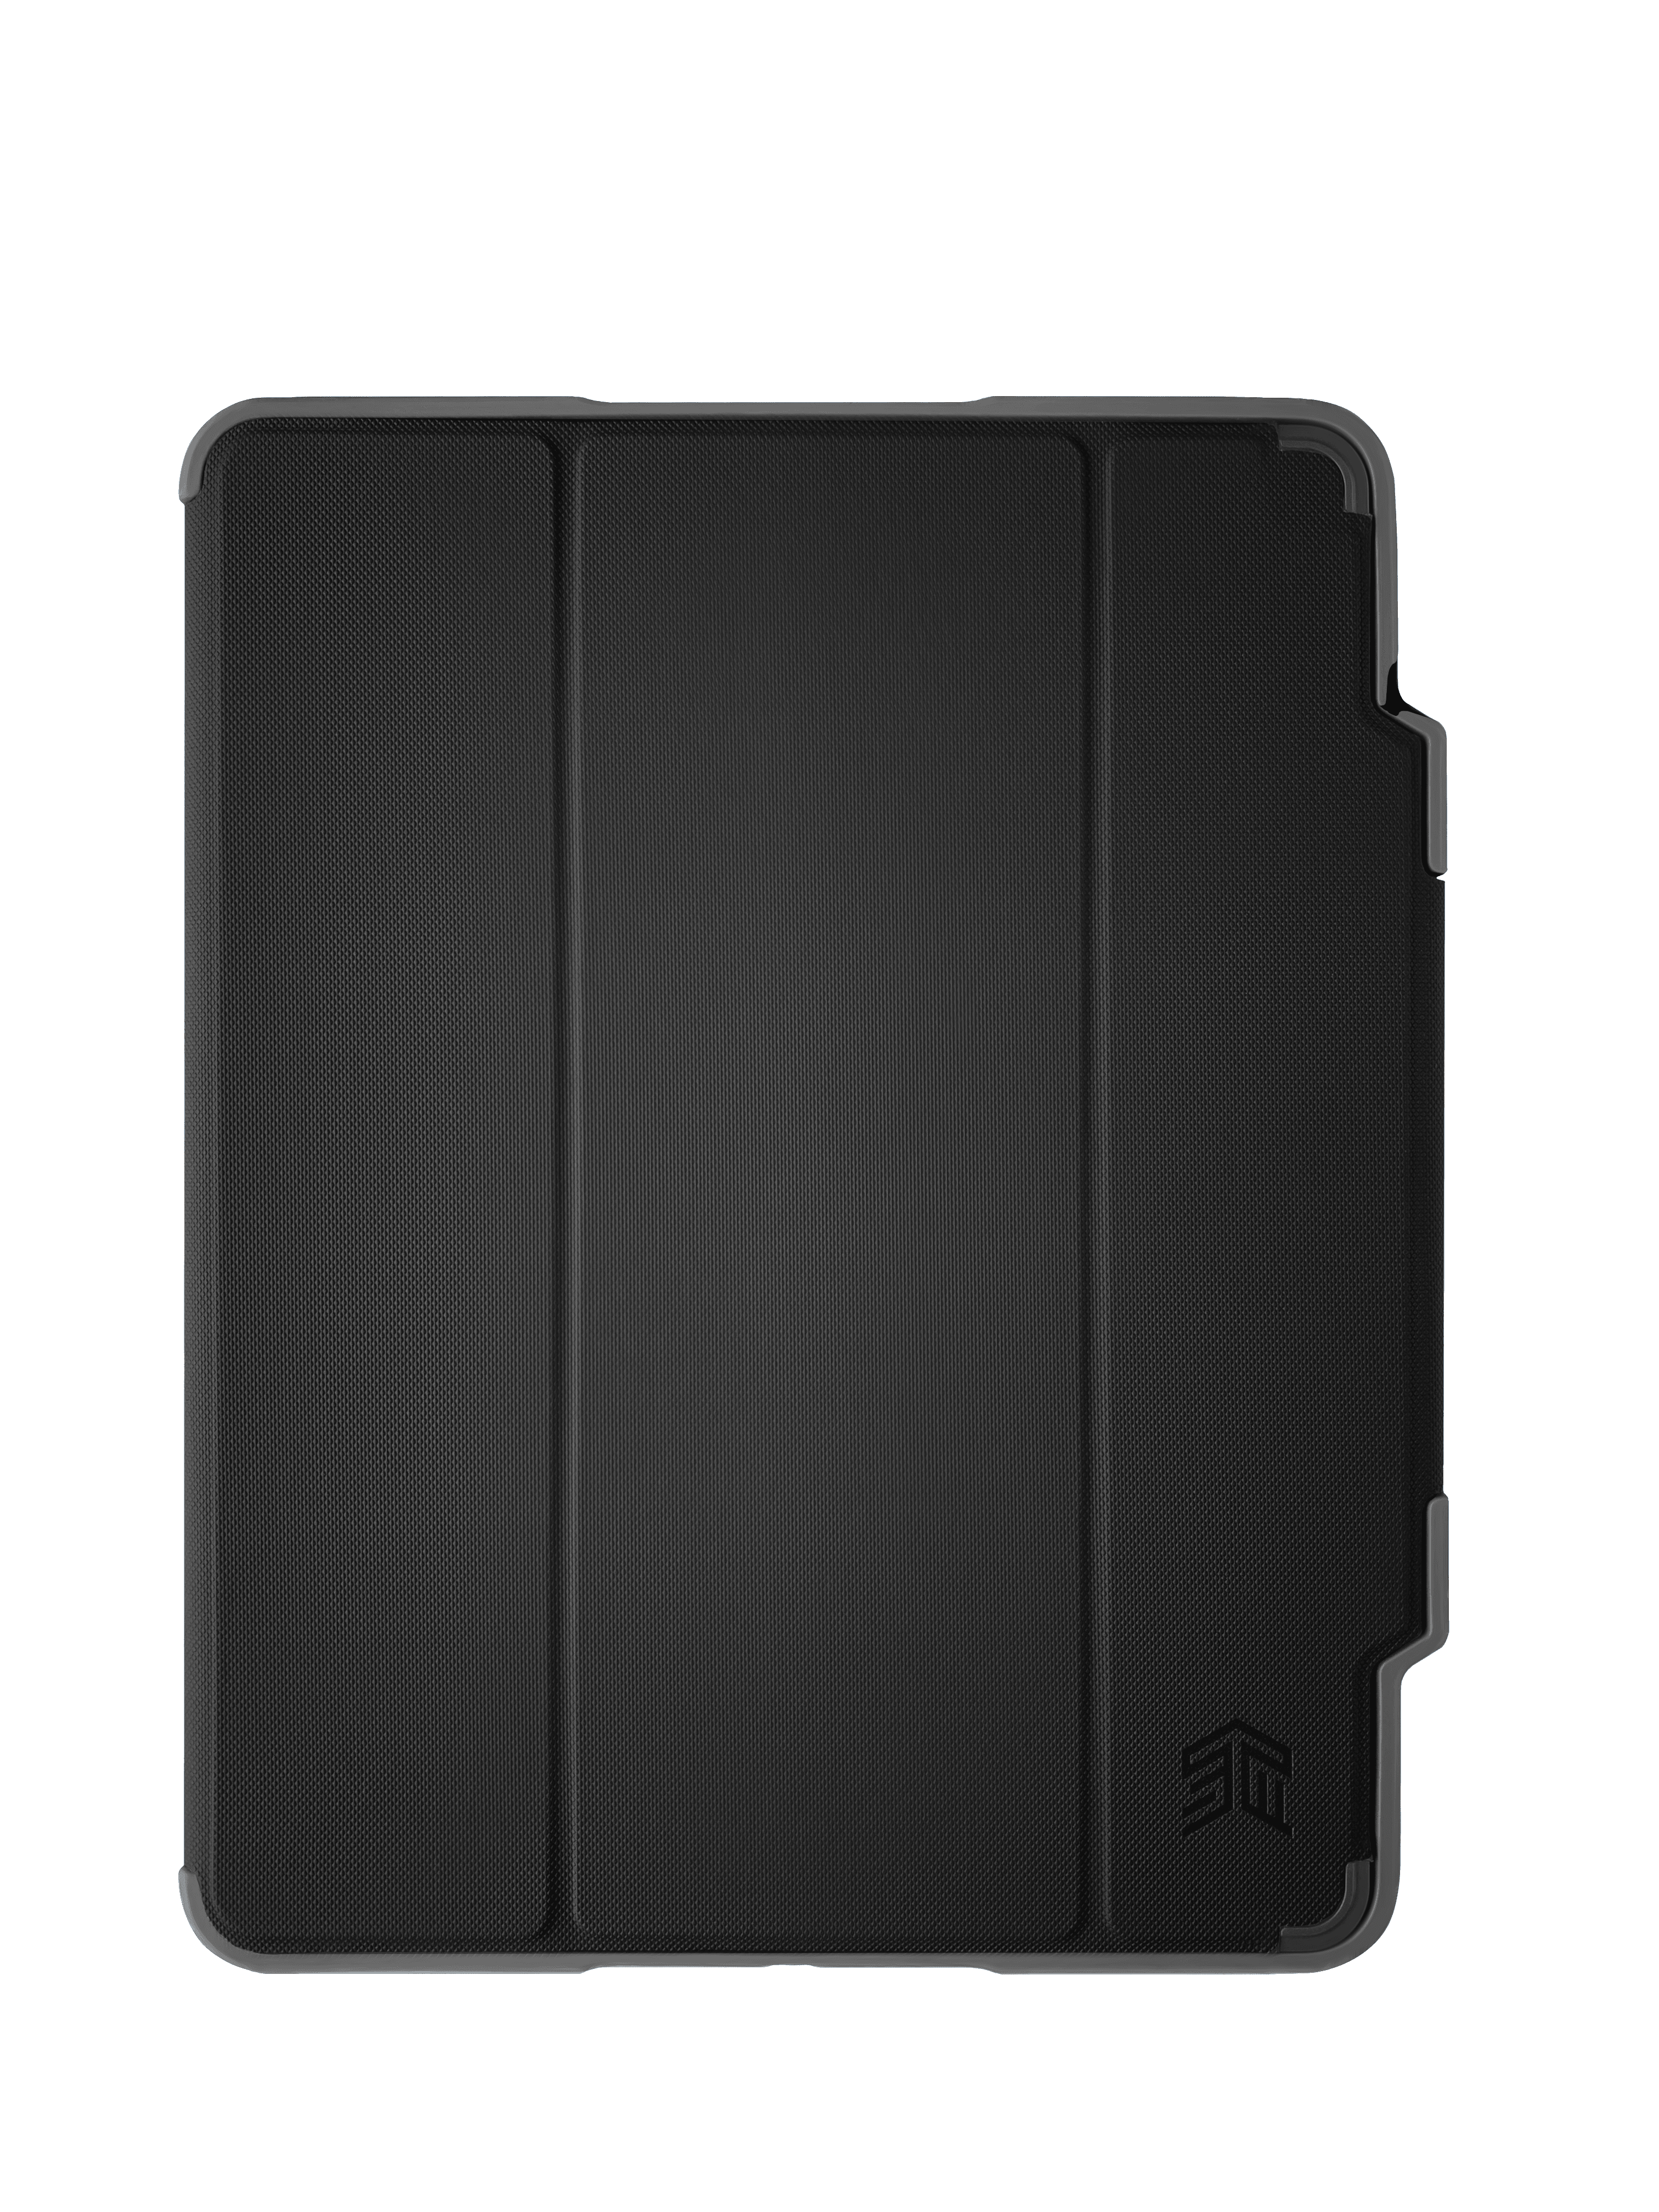 حافظة جلد لجهاز iPad pro 11 لون أسود CASE PLUS for iPad Pro 11 - STM